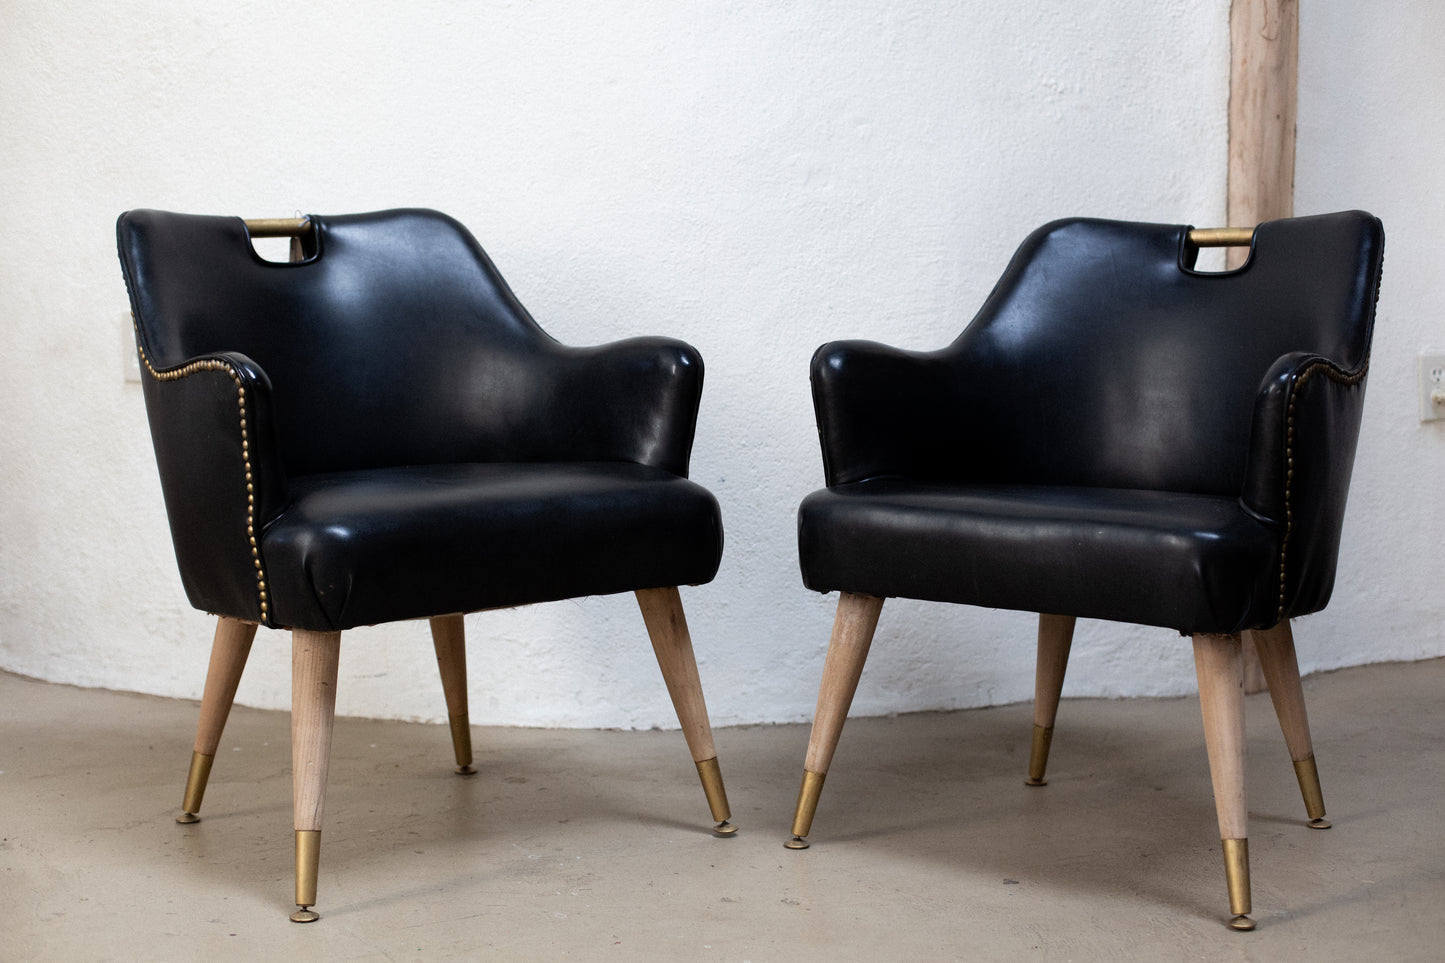 Mid Century Modern Arm Chairs - SET